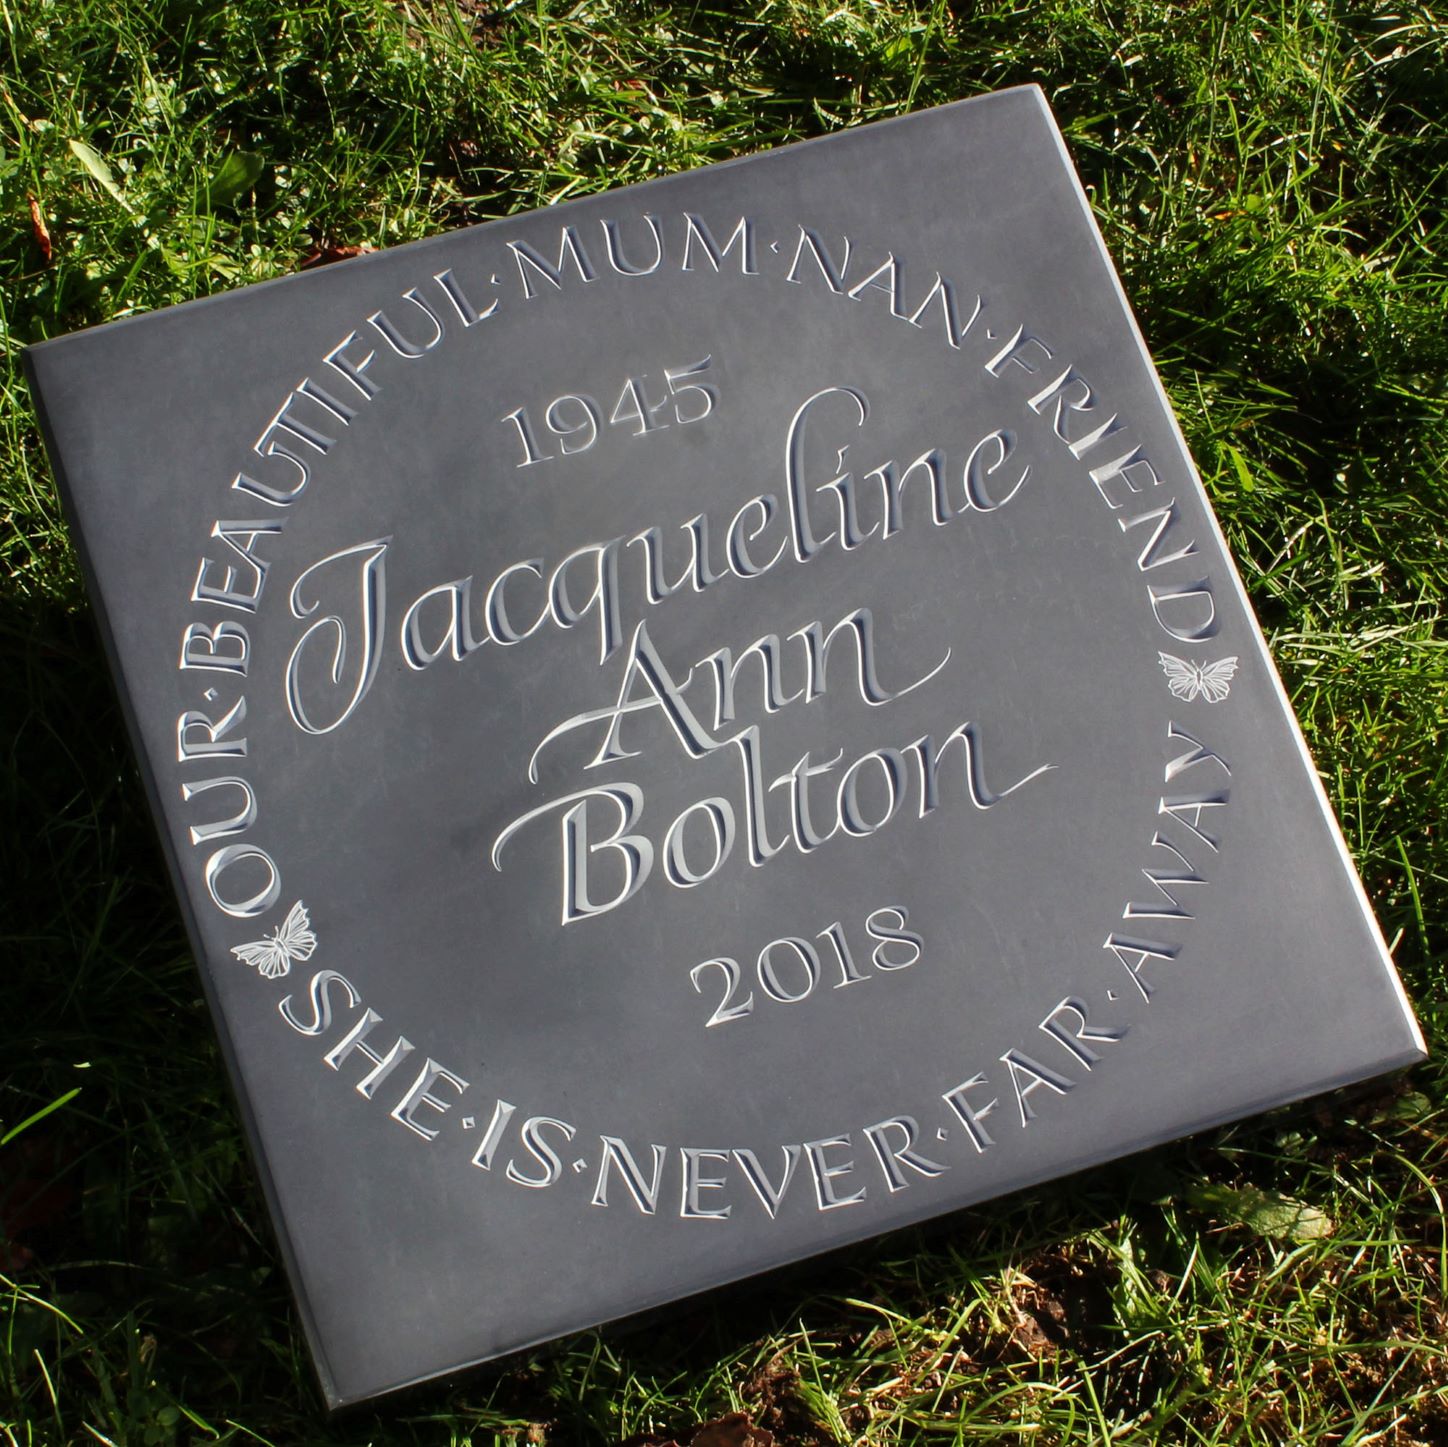 Slate memorials tablet in St Albans